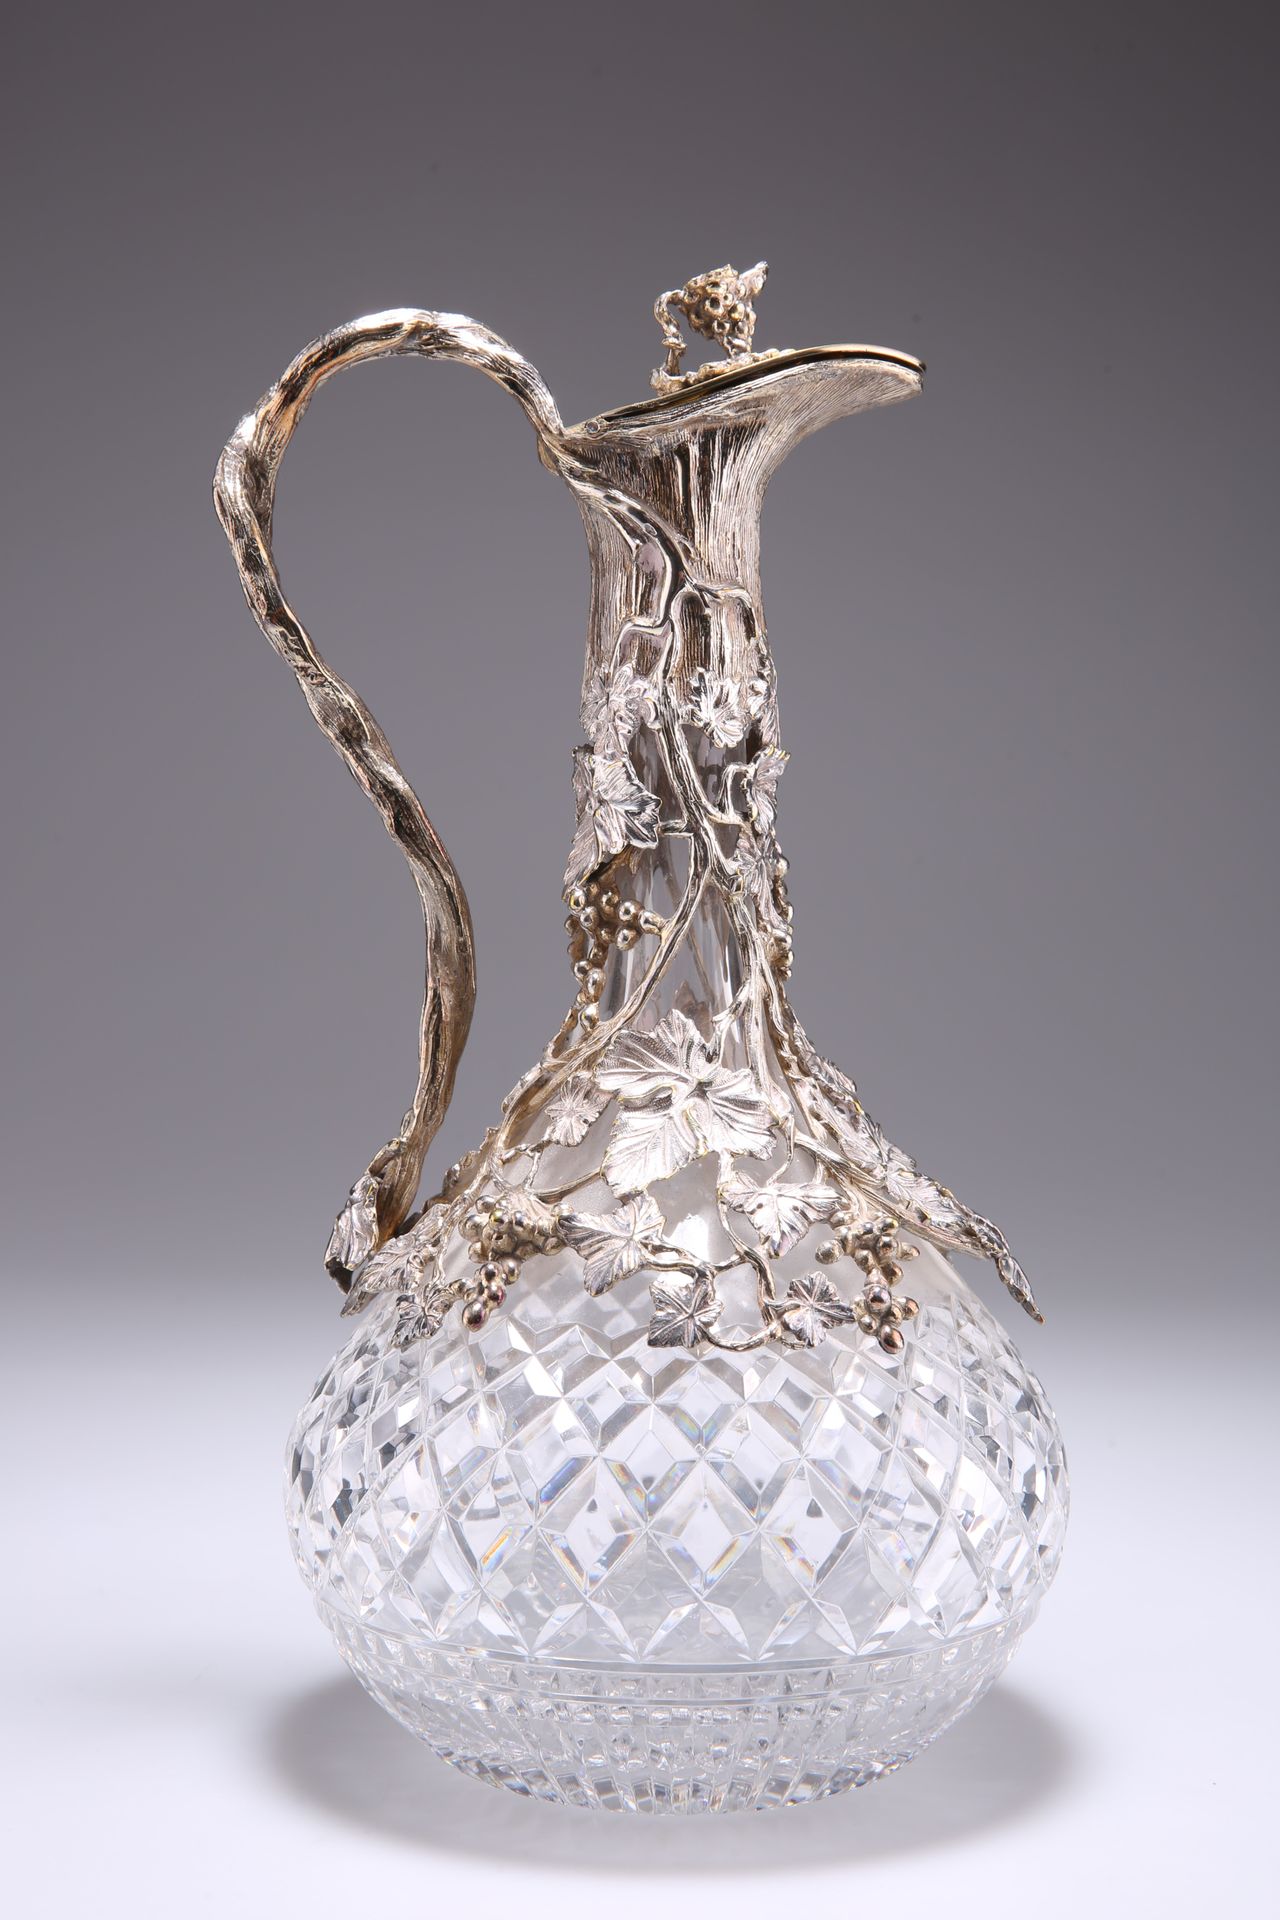 Null 大卫-肖银器有限公司生产的维多利亚风格的银板镶嵌切割玻璃杯，有葡萄状的镂空把手，部分包覆着穿孔的果实藤蔓。高26厘米608036